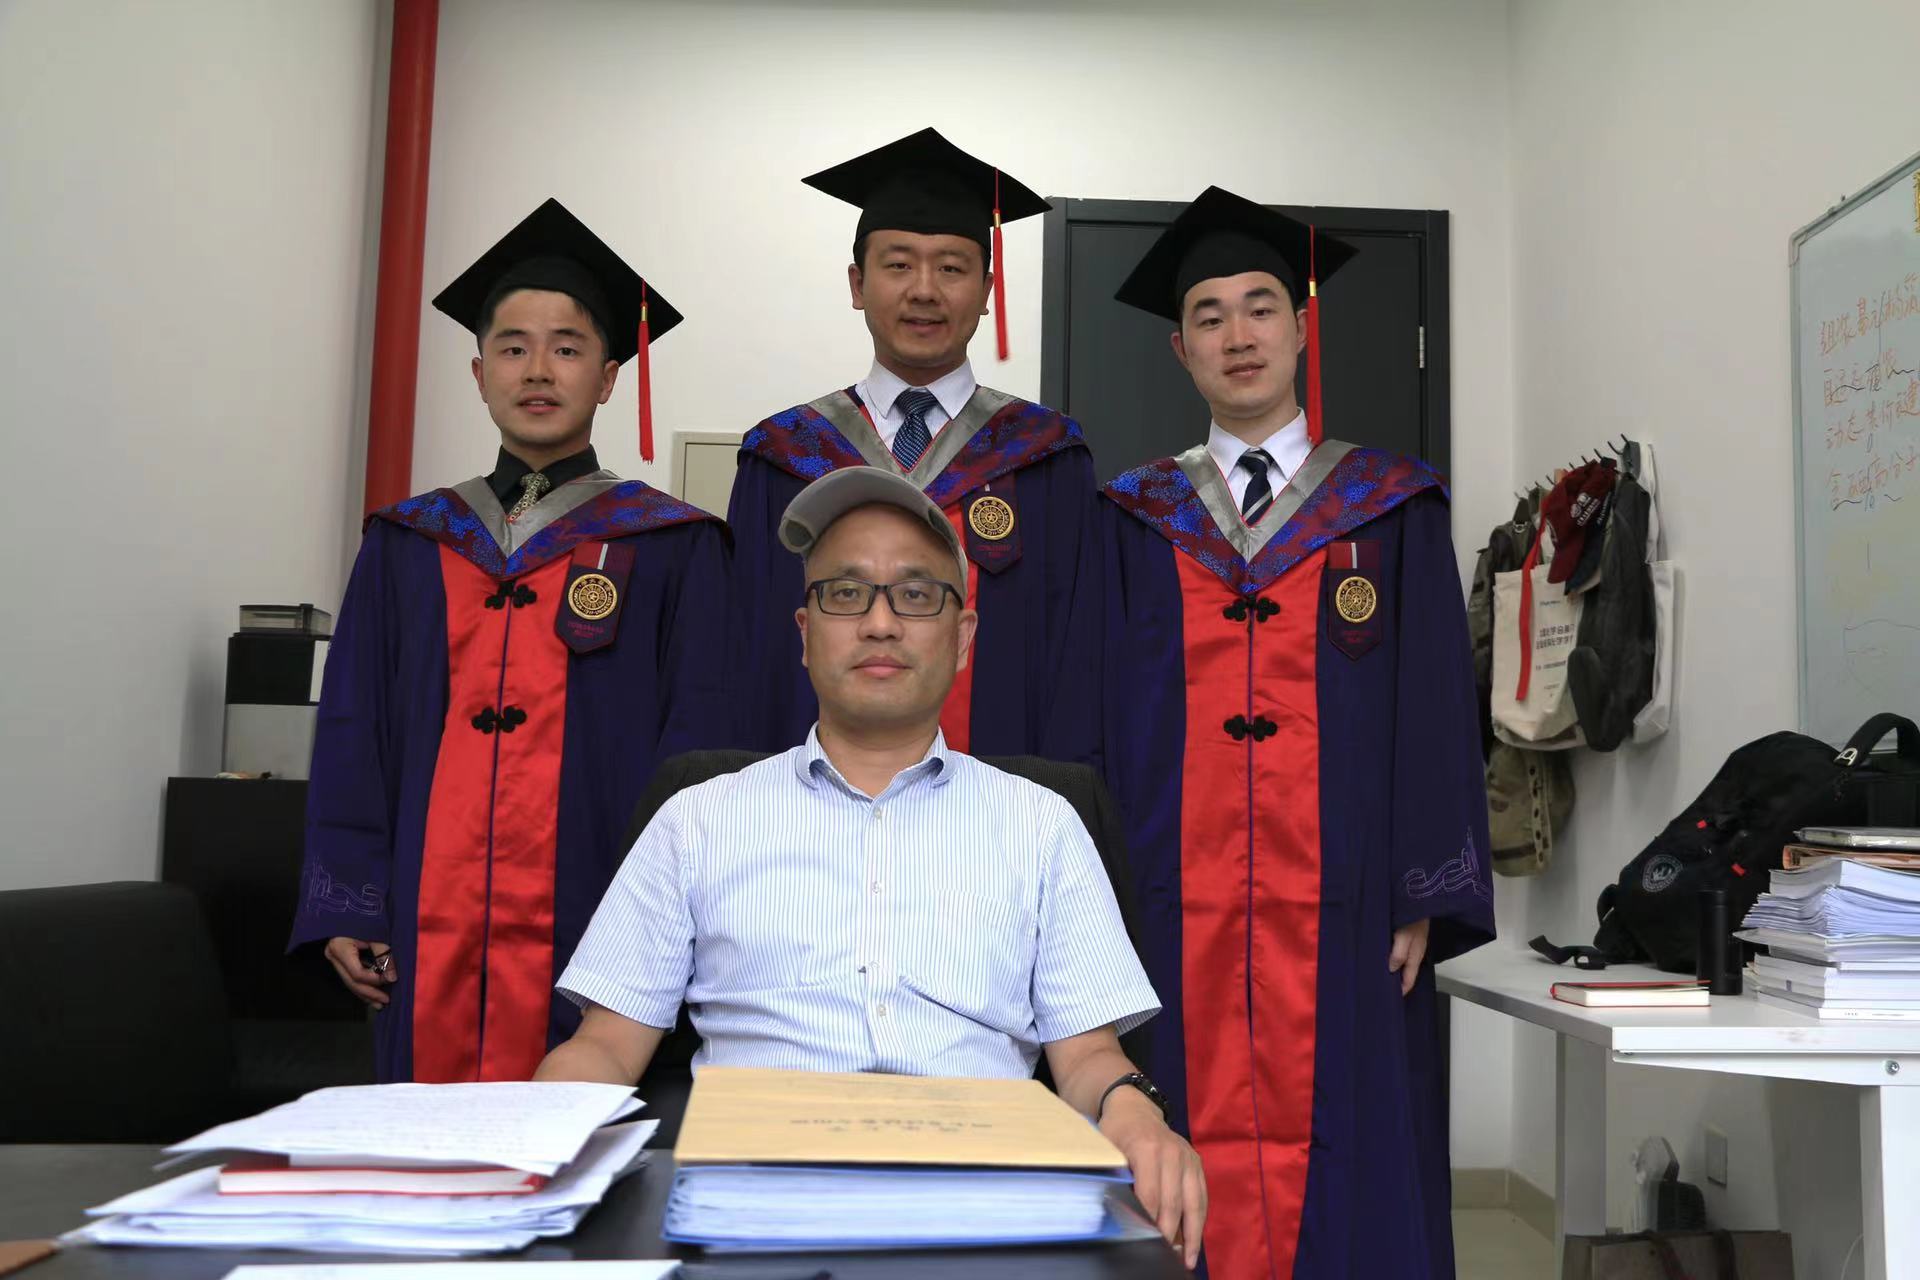 Congratulations to Mr. Yiheng Dai, Mr. Shuojiong Pan, Mr. Peng Zhao and Mr. Zhuoxin Ge on their graduation